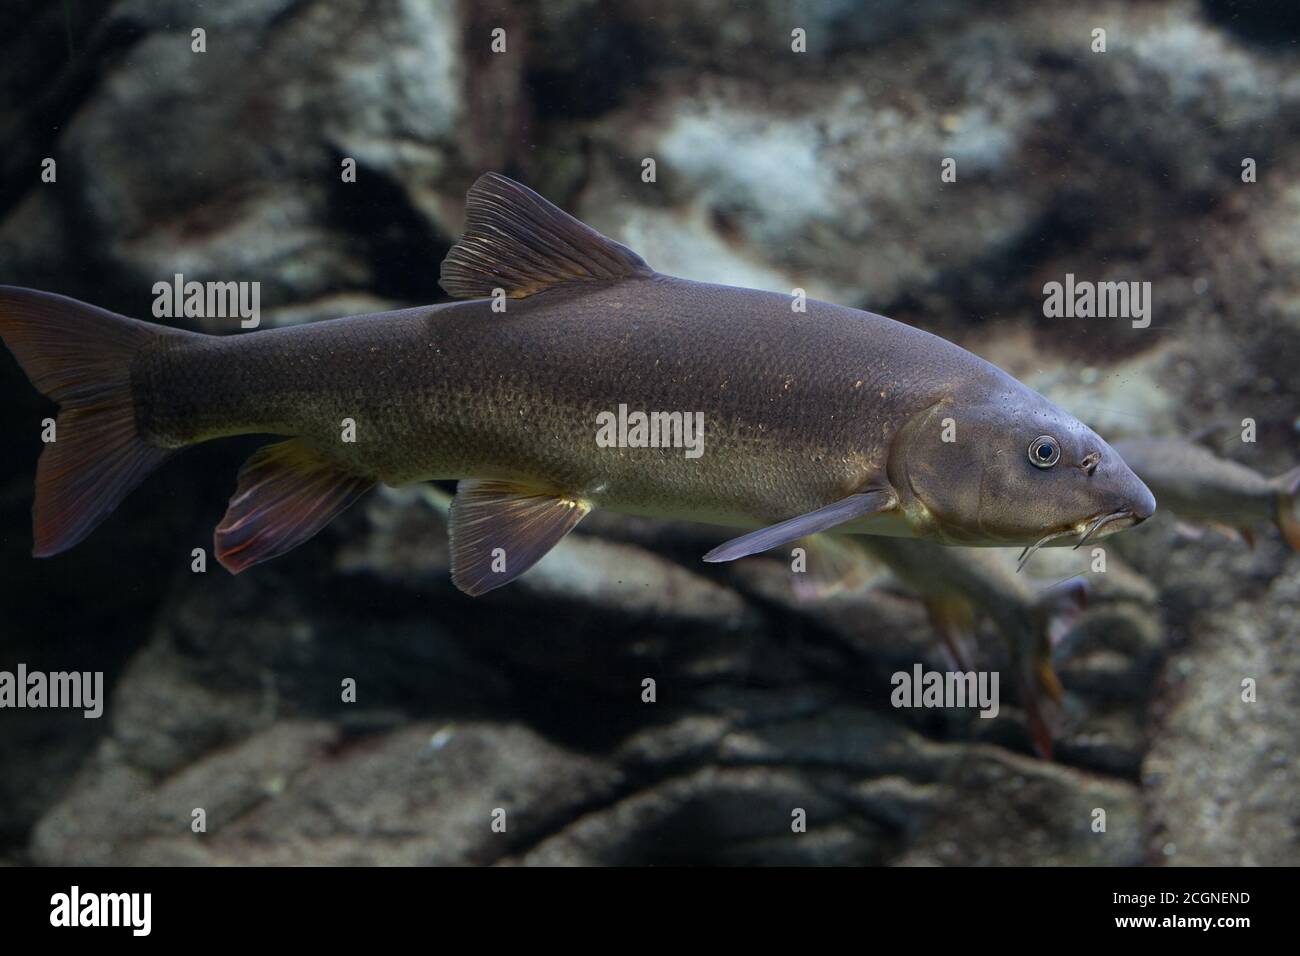 Closeup of catfish swimming with selective focus Stock Photo